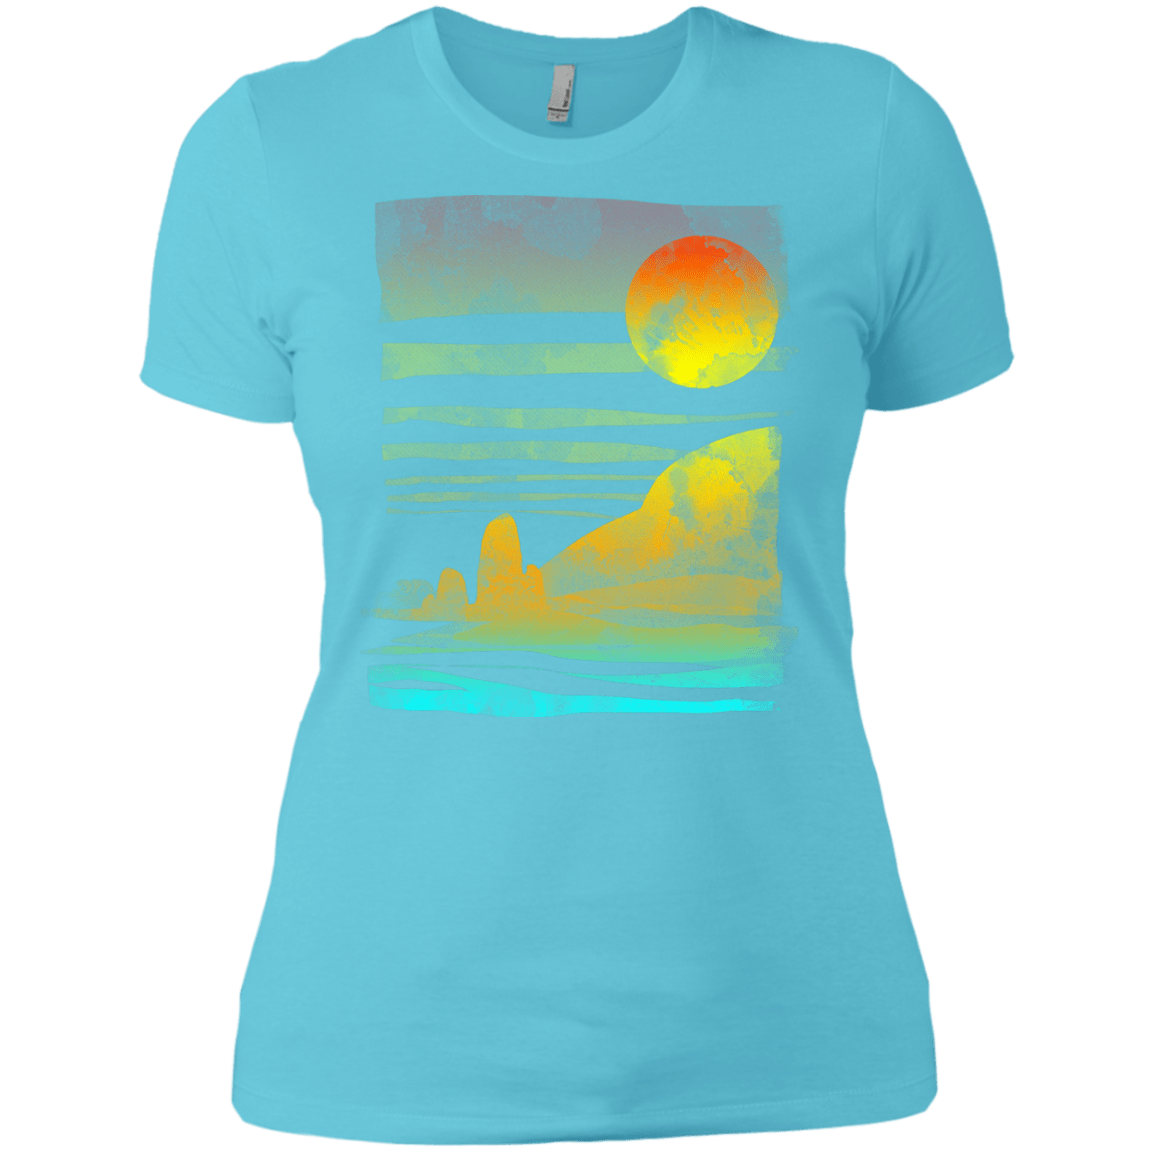 T-Shirts Cancun / X-Small Landscape Painted With Tea Women's Premium T-Shirt